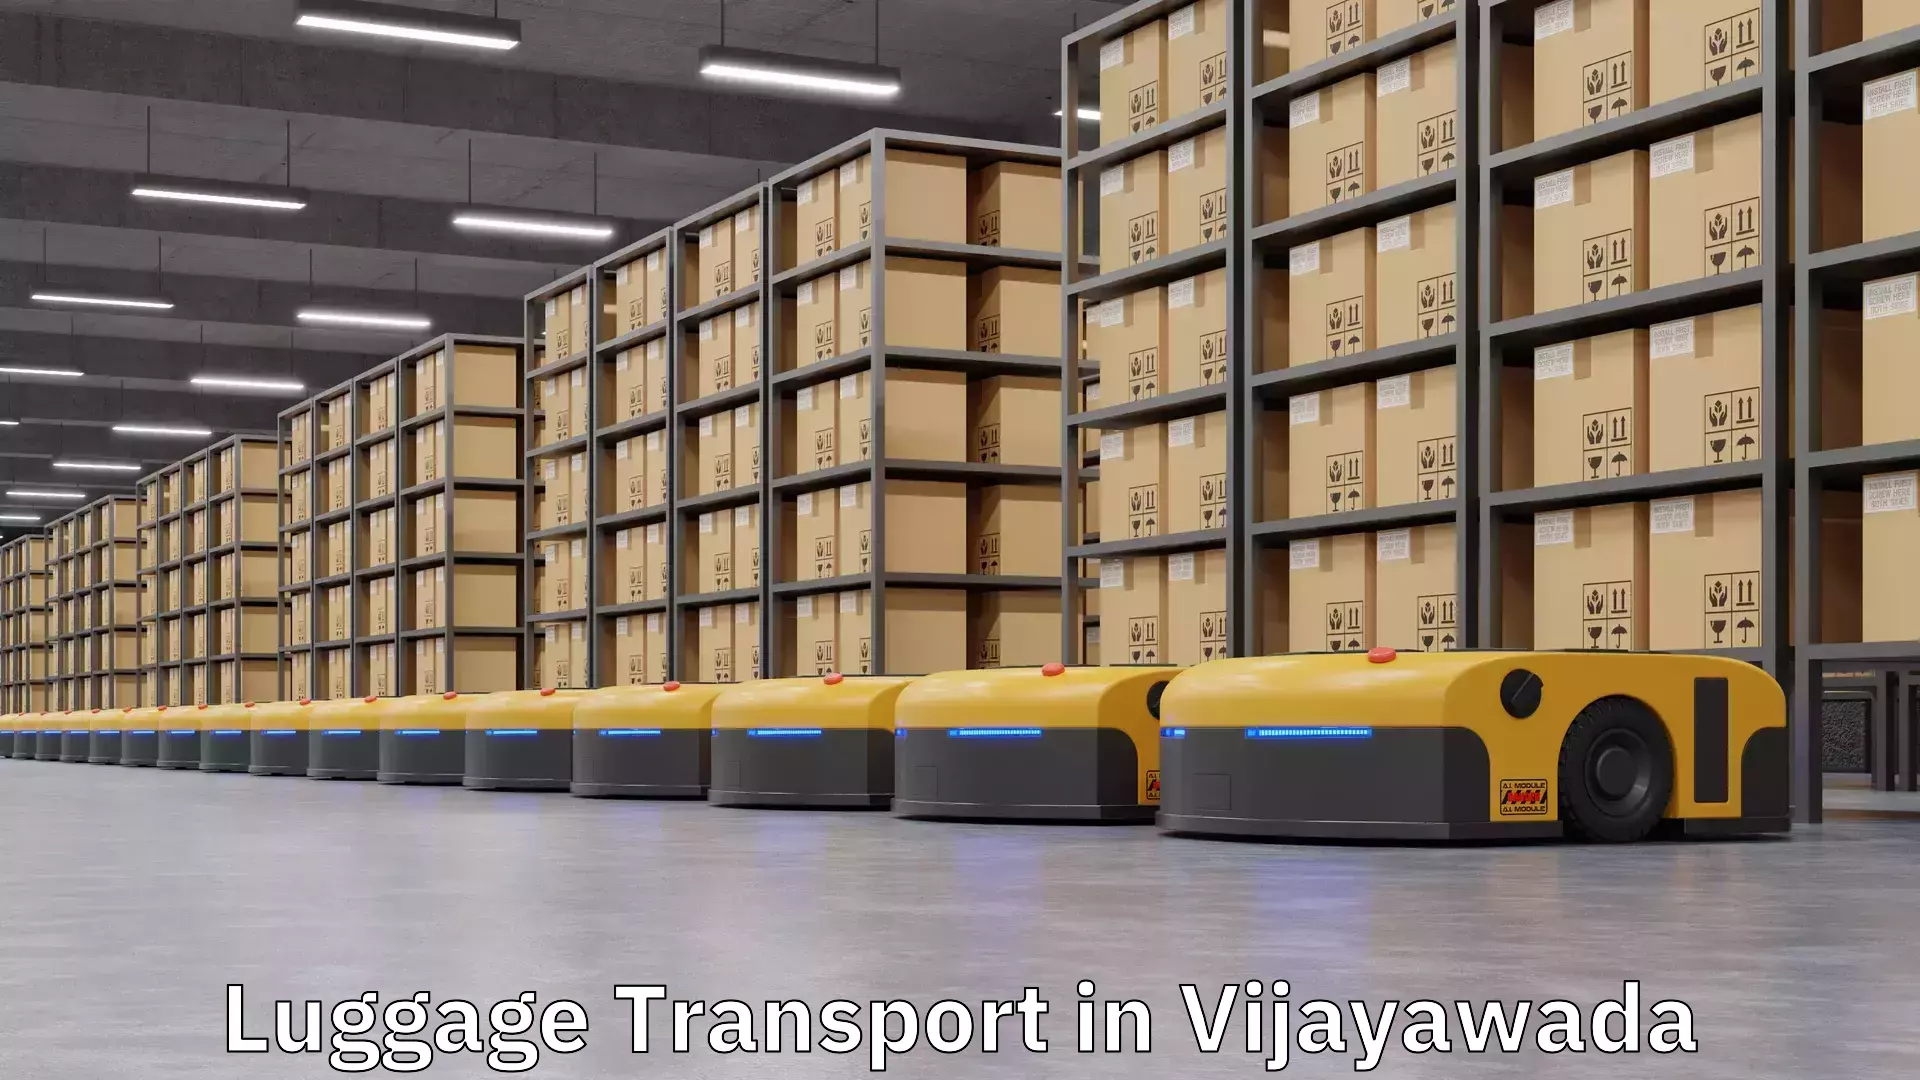 Luggage transfer service in Vijayawada